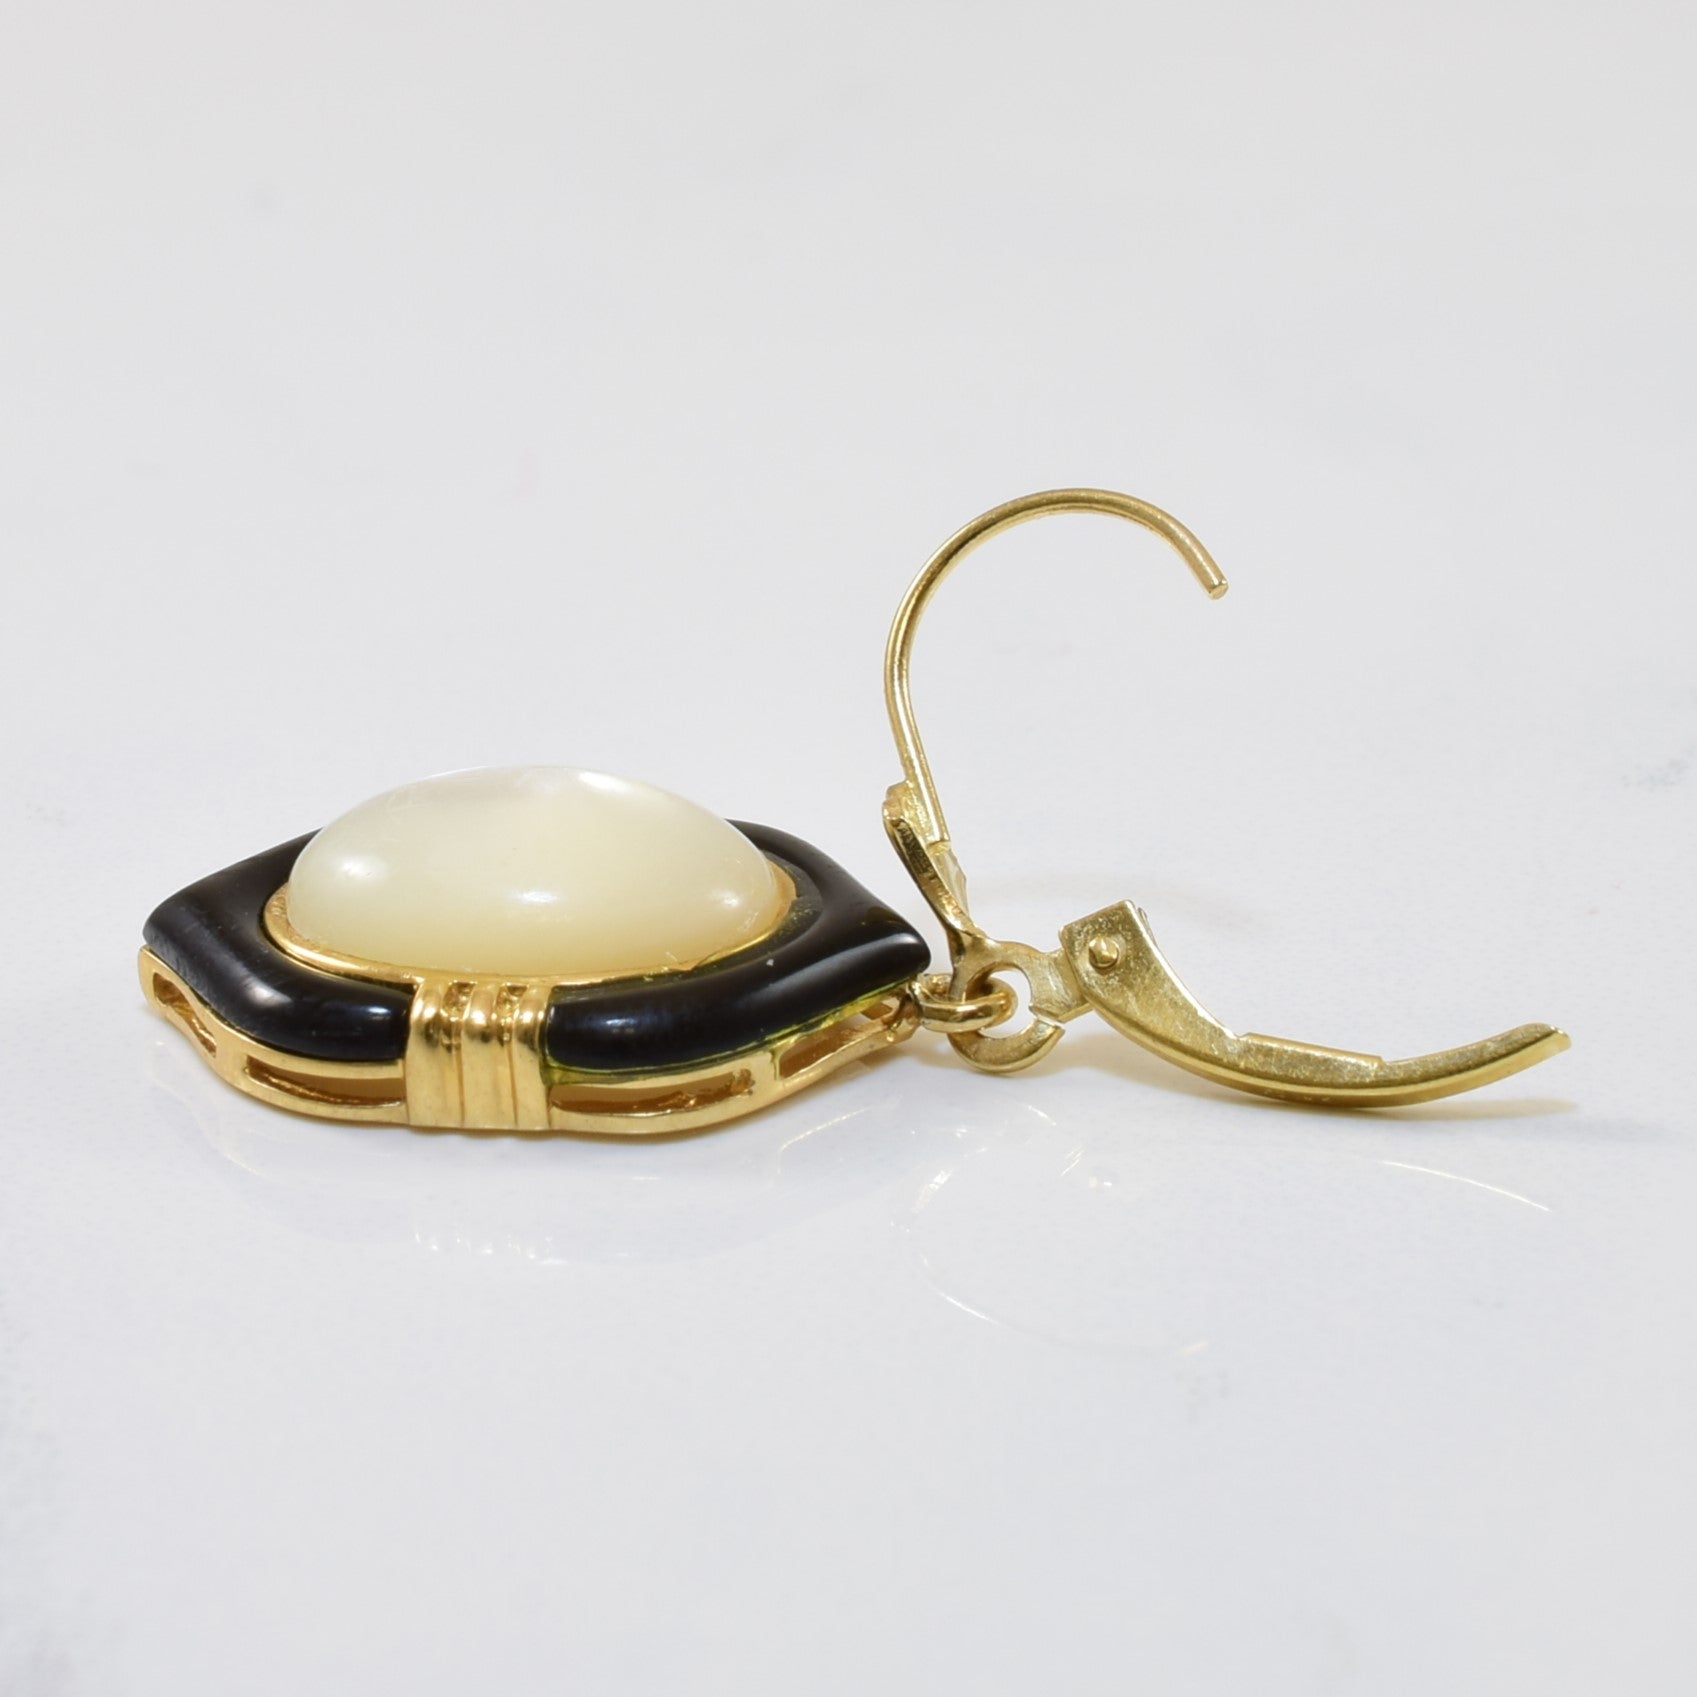 Pearl & Black Paste Drop Earrings | 8.00ctw, 2.50ctw |